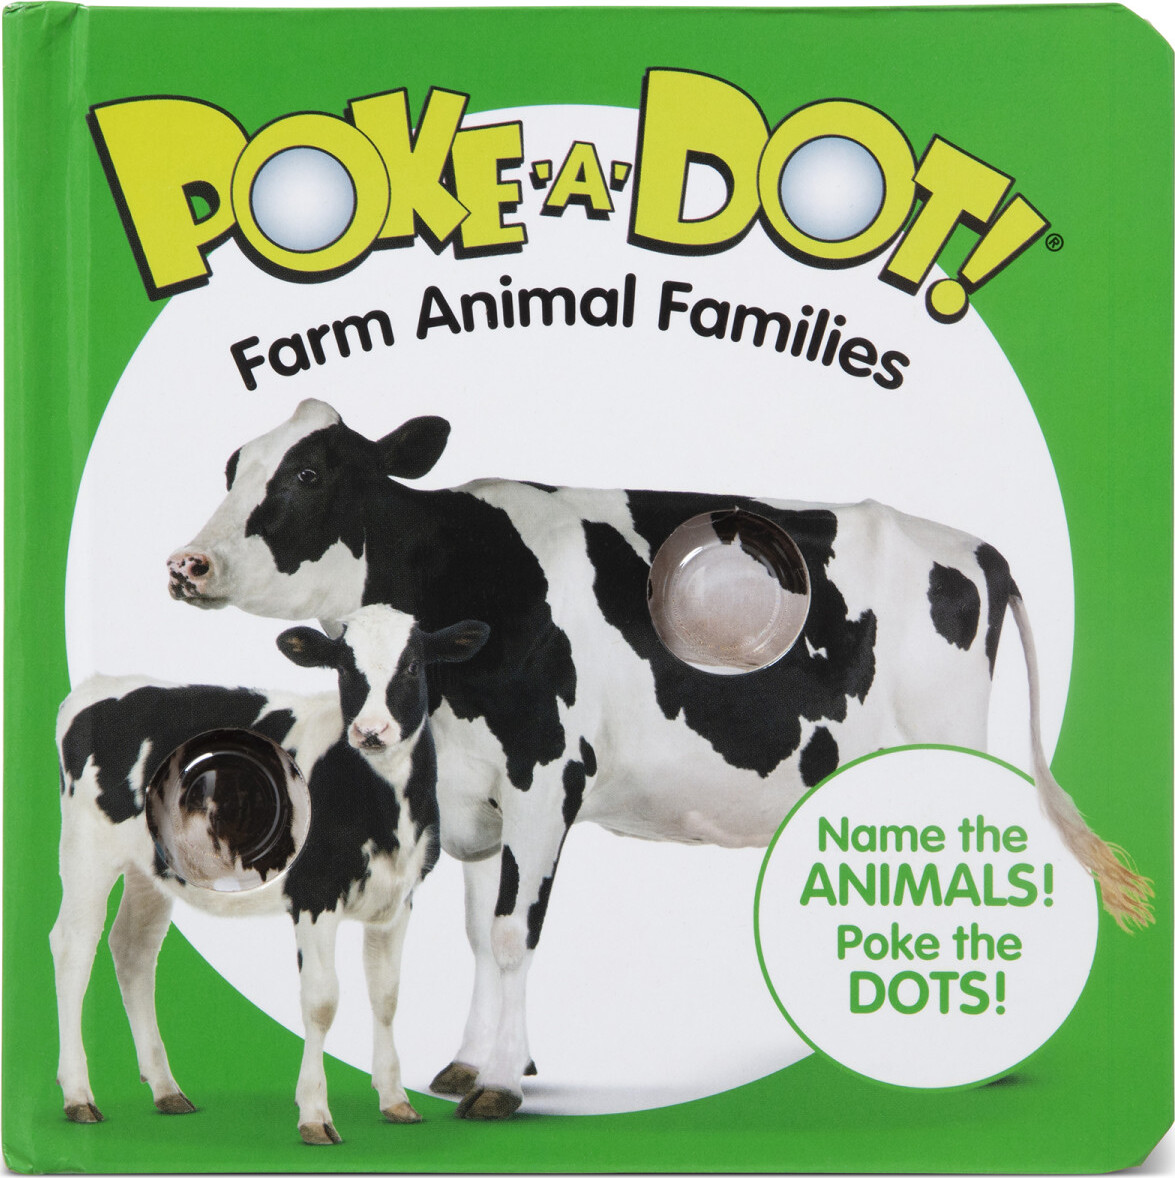 Small Poke A Dot: Farm Animal Families - Imagine That Toys